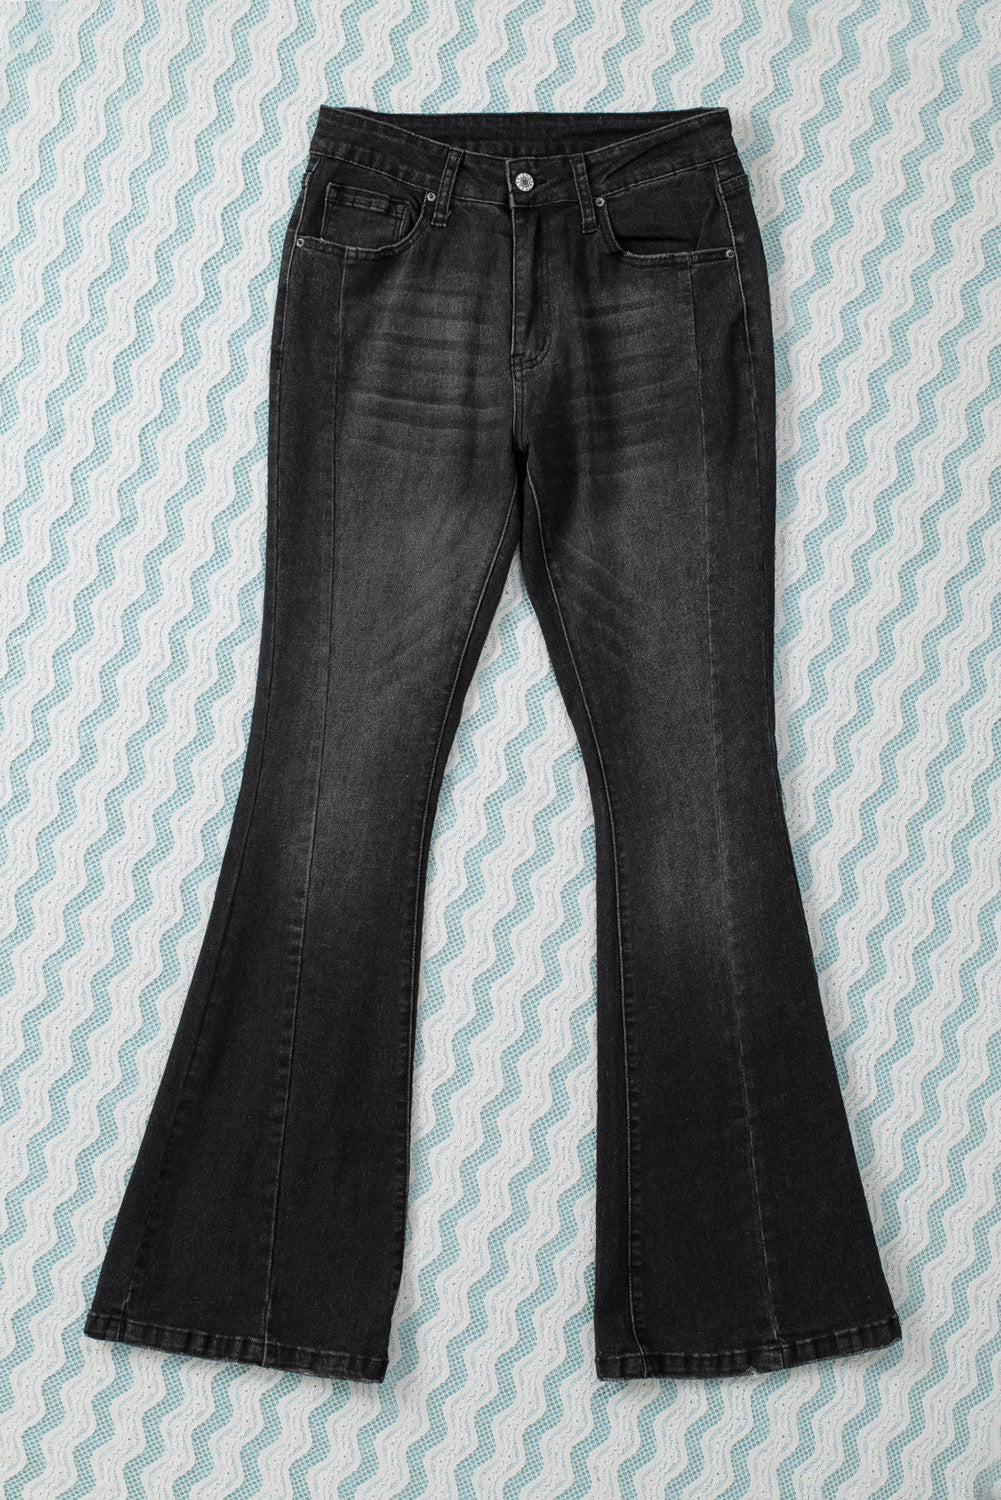 Black High Waist Flare Jeans with Pockets Jeans JT's Designer Fashion